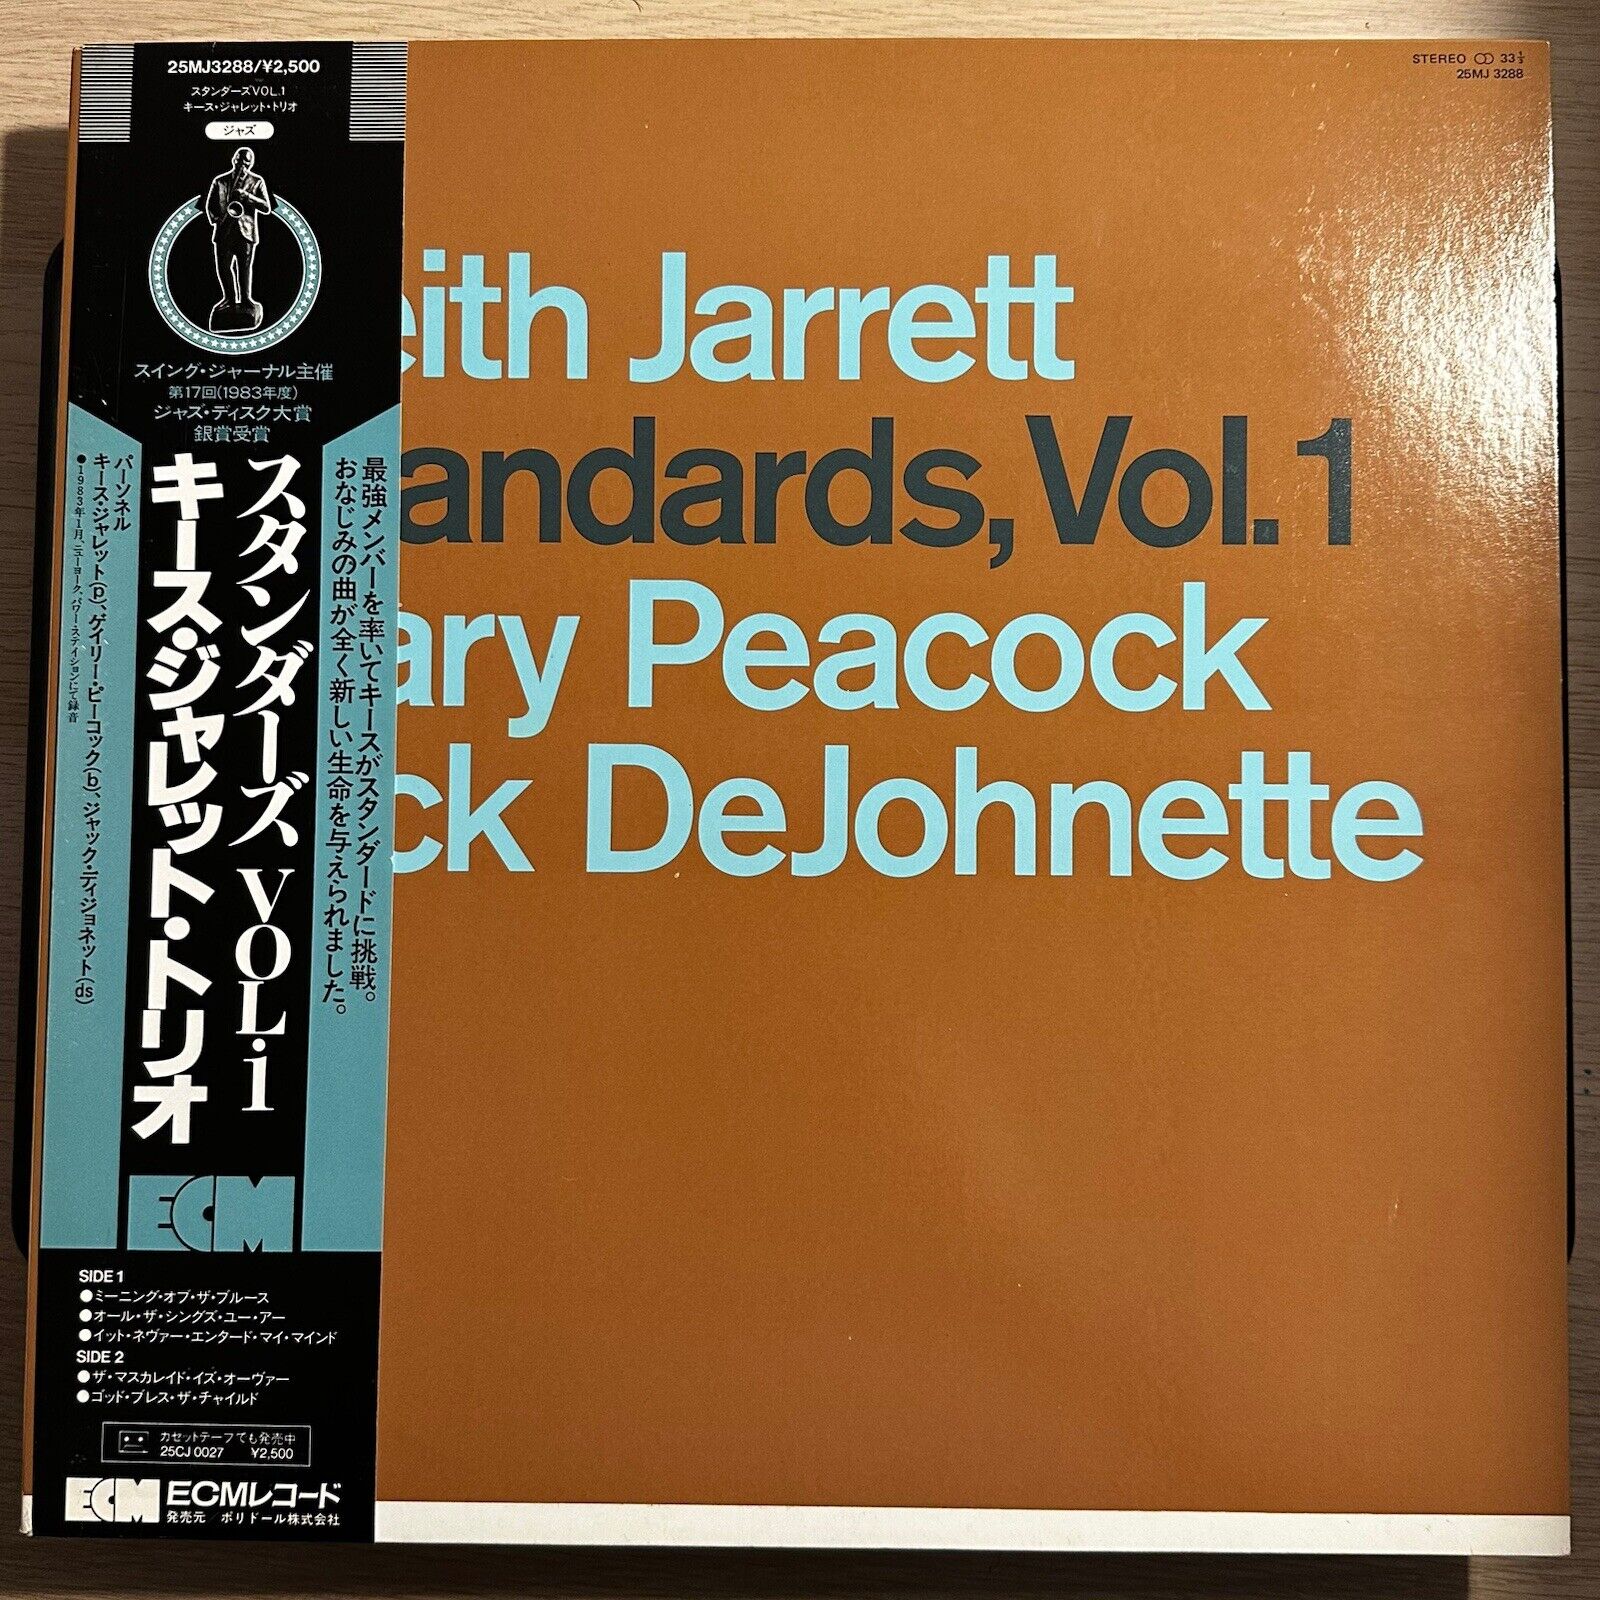 Keith Jarrett Gary Peacock Jack DeJohnette ‎– Standards Vol.1 Original Japanese